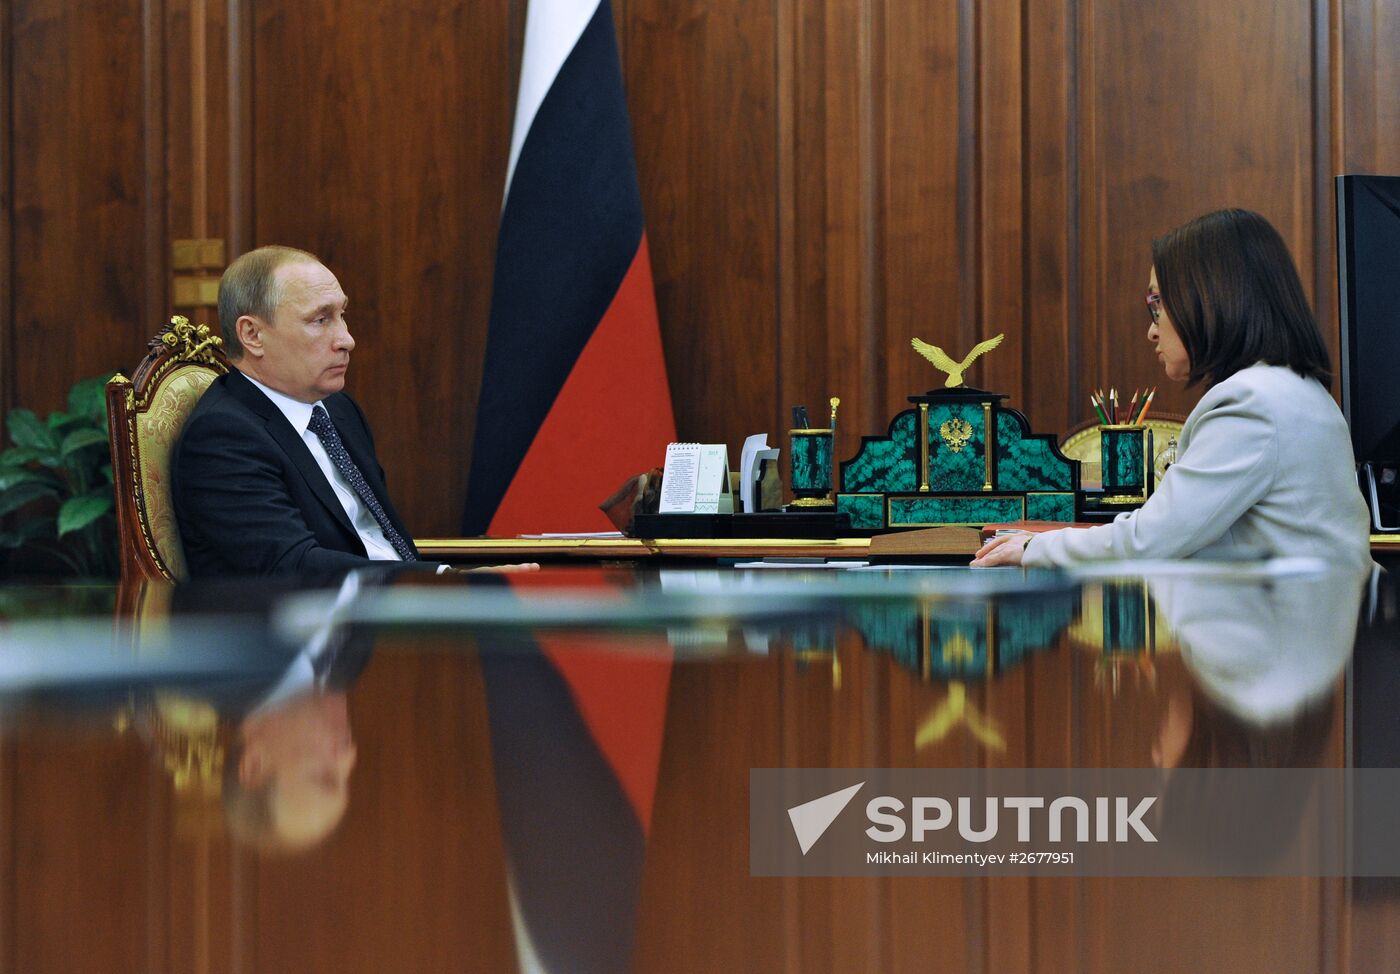 President Vladimir Putin meets with Central Bank Governor Elvira Nabiullina